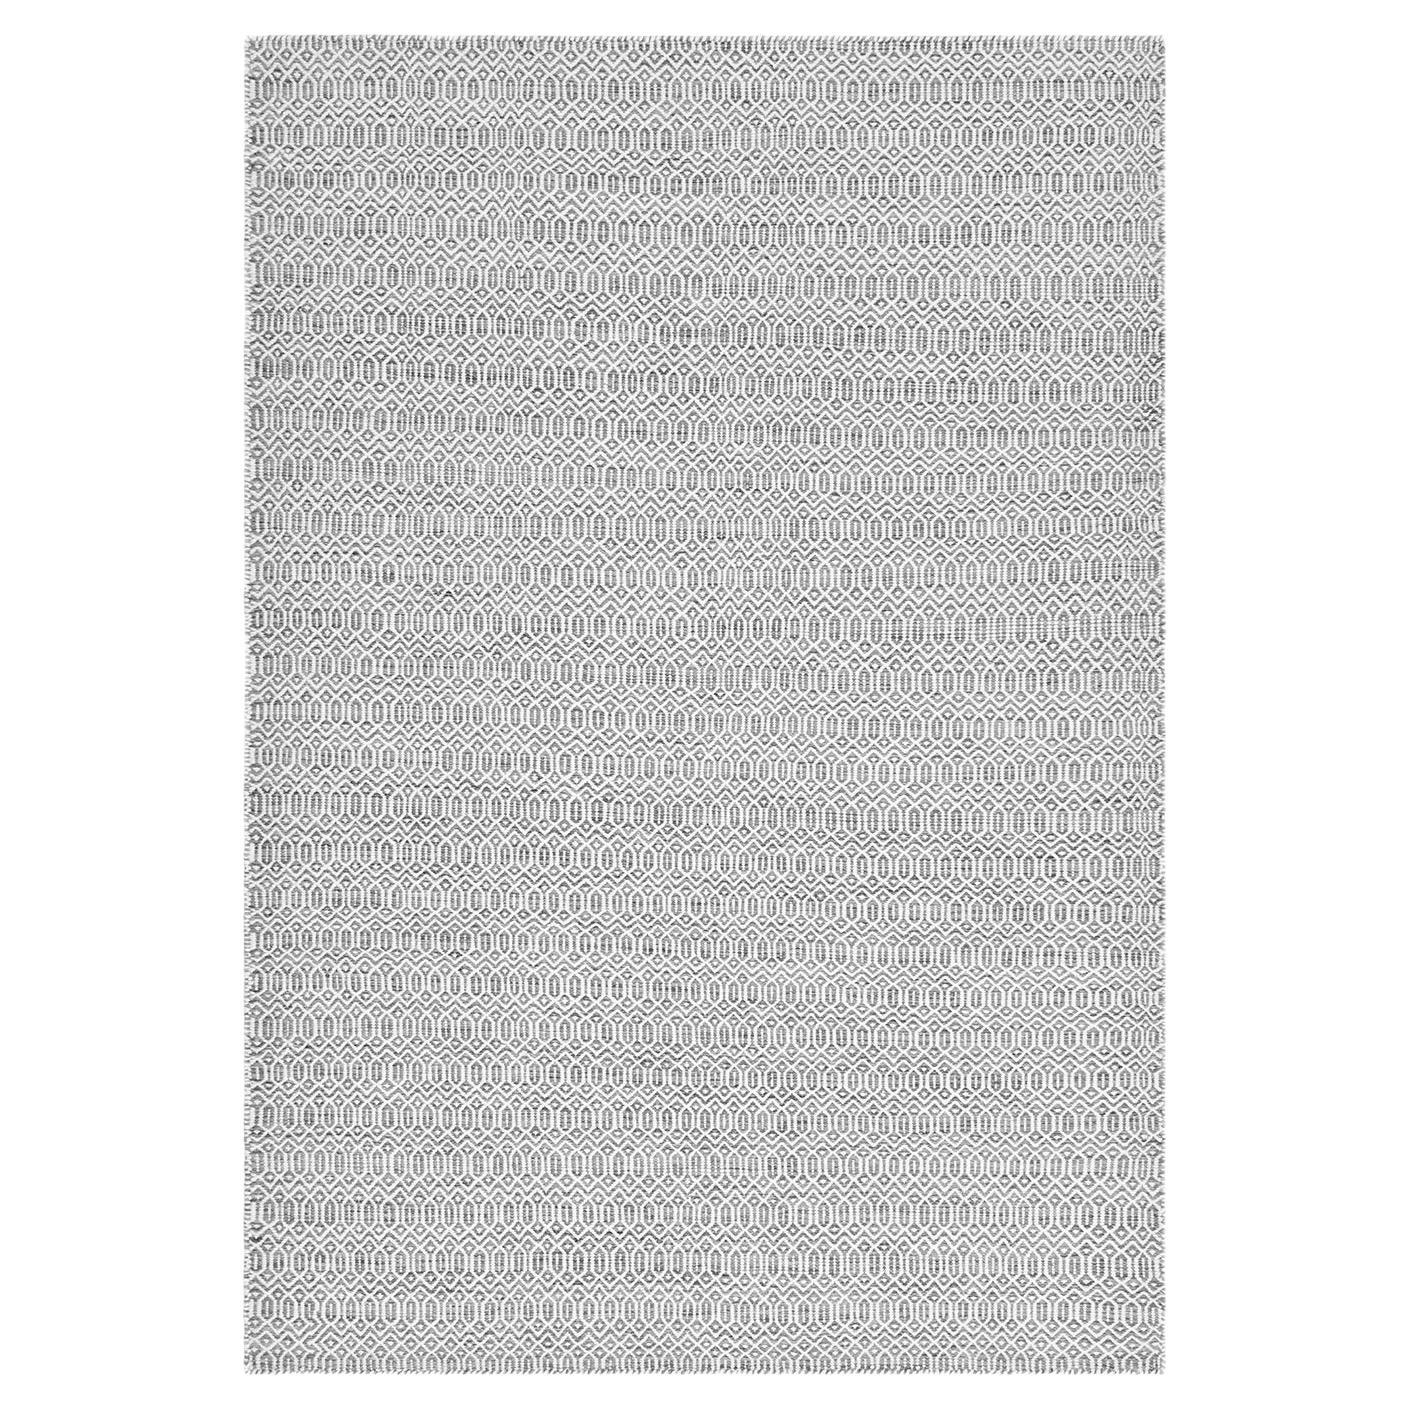 Solo Teppiche Flachgewebe Geometrisch Hand gewebt Grau 10 x 14 Bereich Teppich